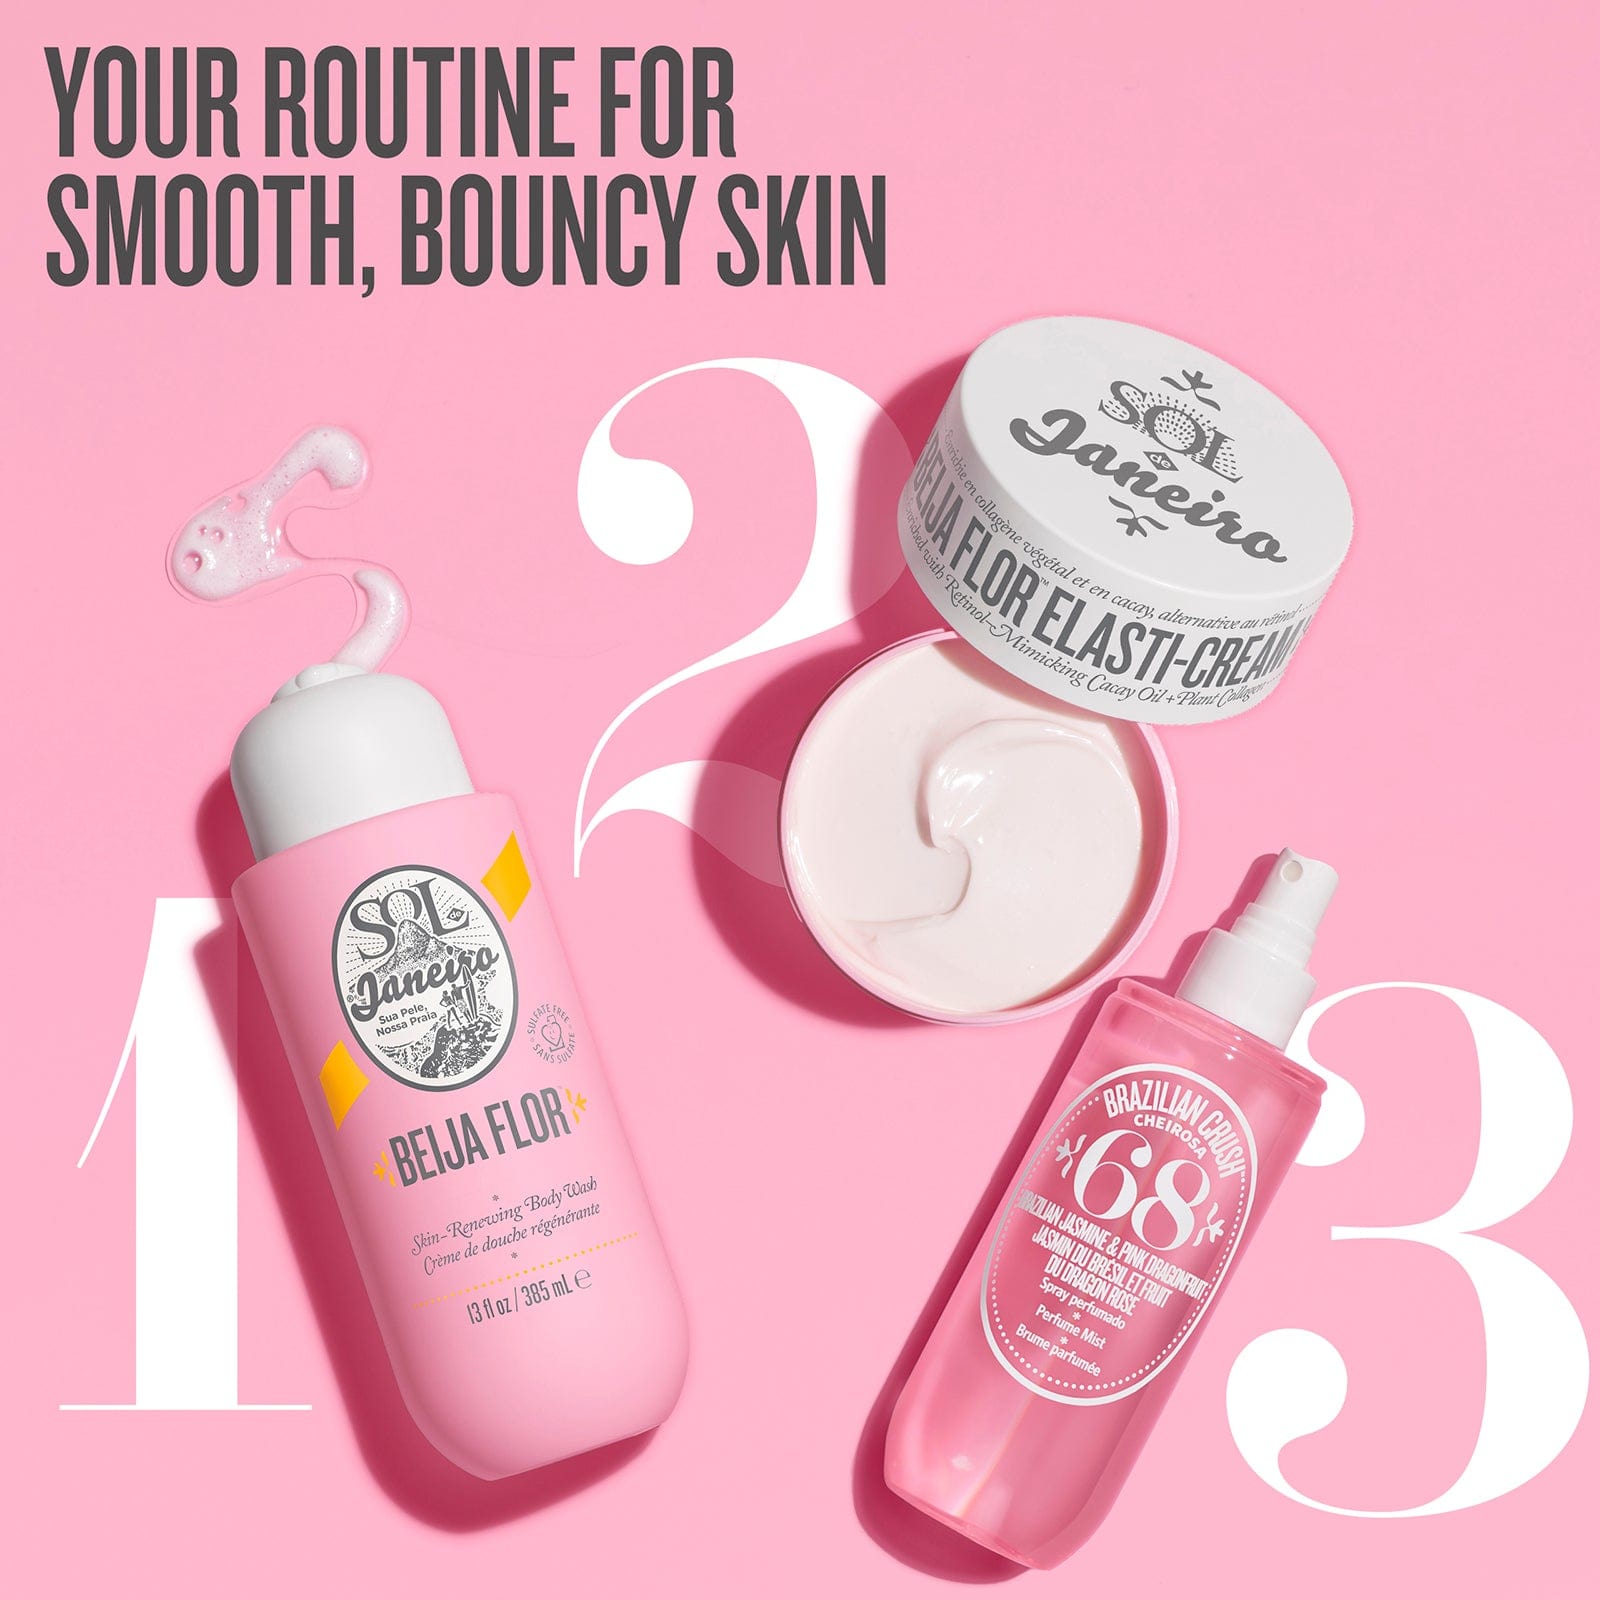 Your Routine for smooth, bouncy skin: 1. Beija Flor™ Renewing Body Wash, 2. Beija Flor™ Elasti-cream, 3. Cheirosa 68 perfume mist | Sol de Janeiro